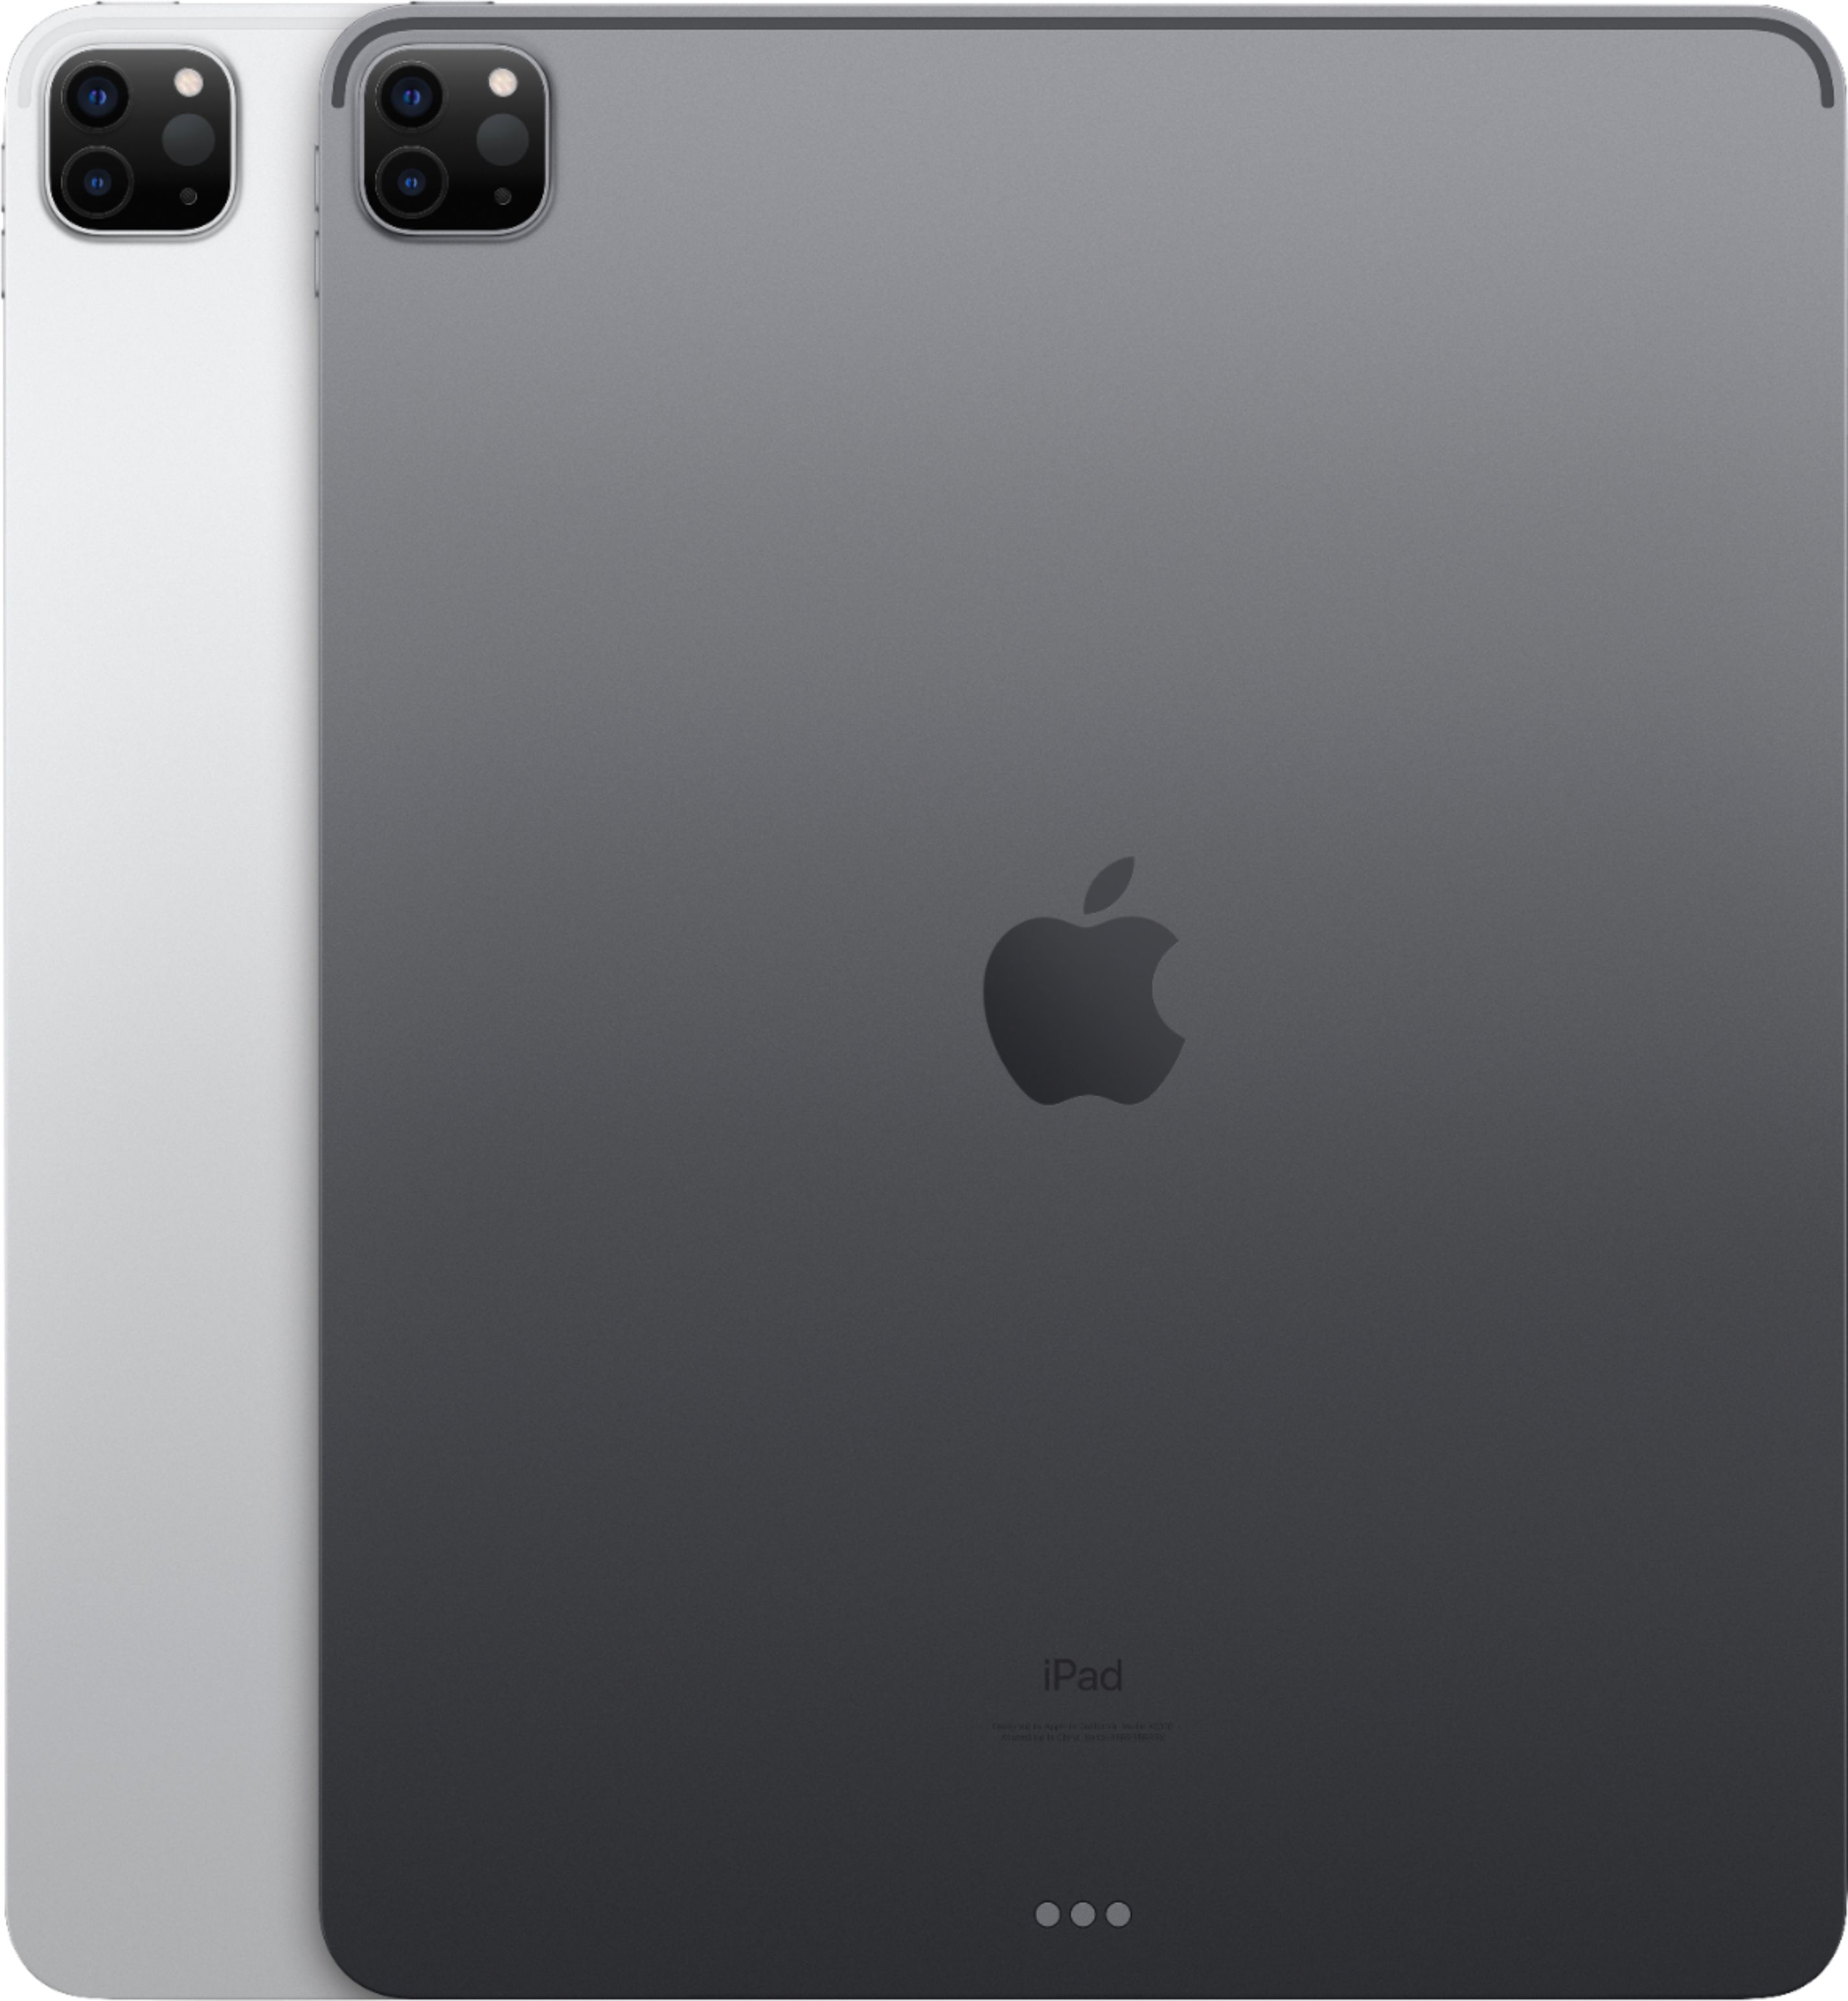 Apple 12.9-Inch iPad Pro with Wi-Fi 256GB Silver MHNJ3LL/A - Best Buy